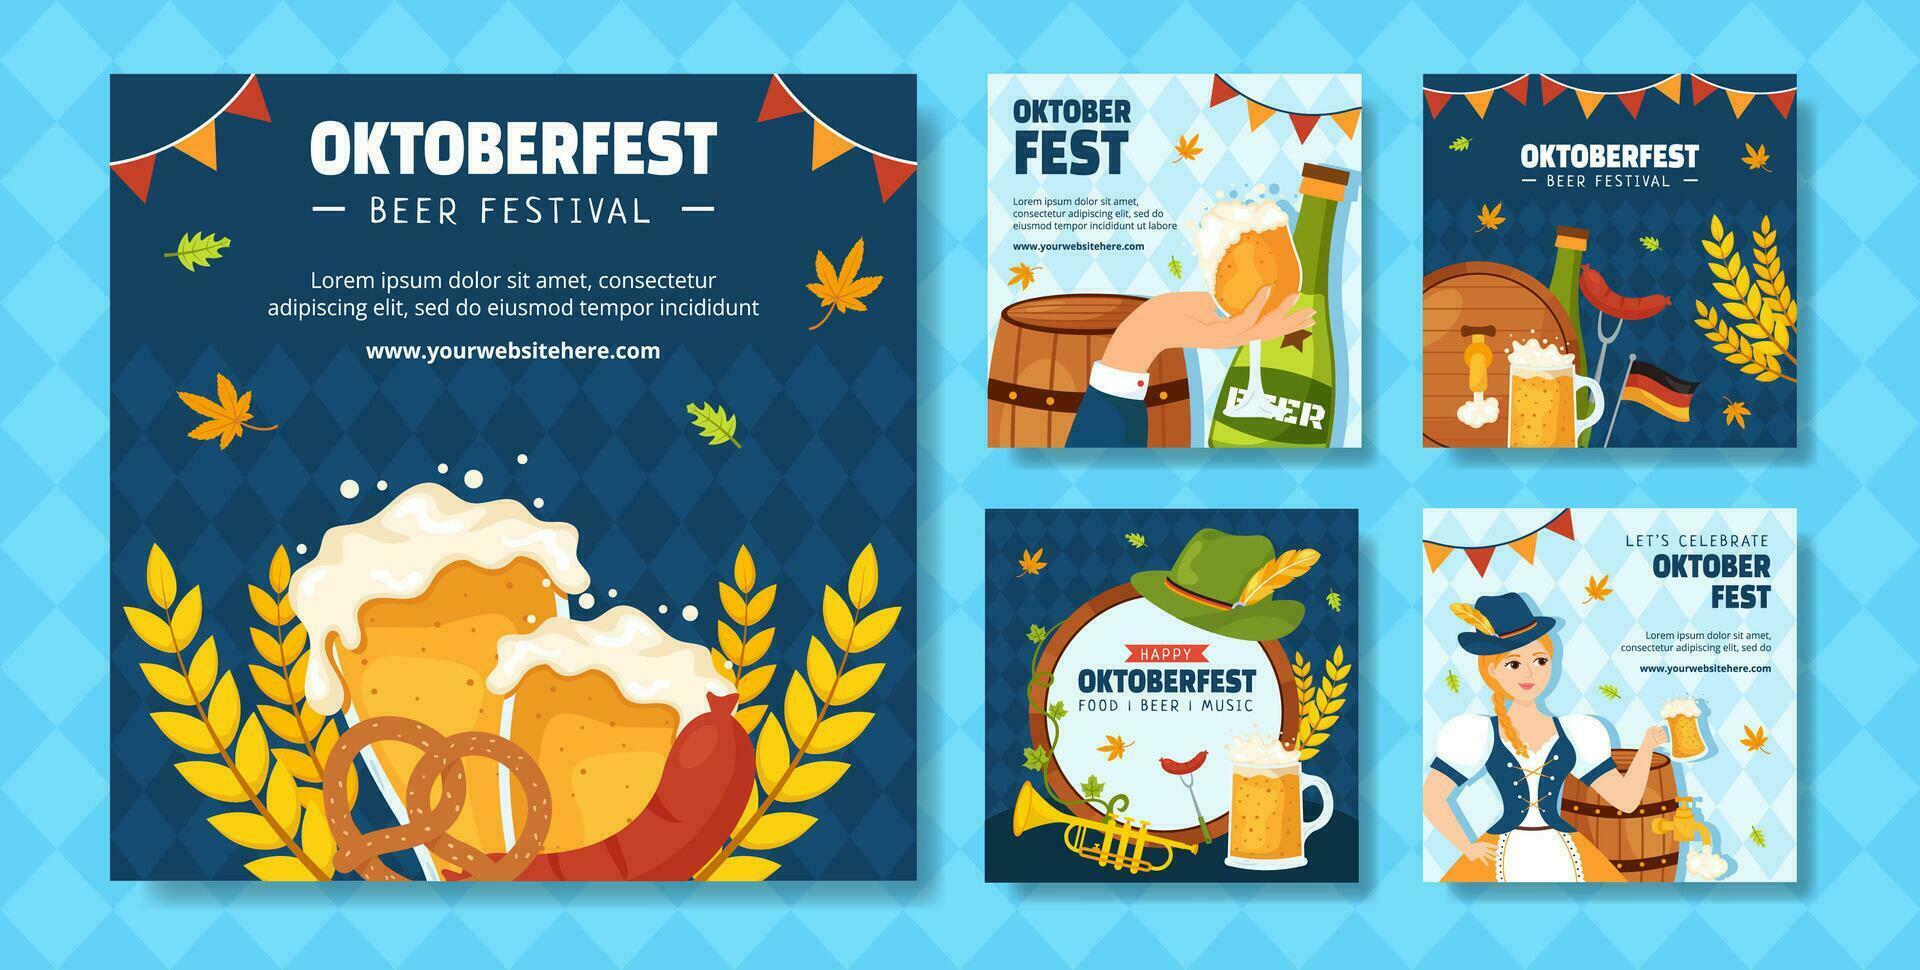 Oktoberfest Beer Festival Social Media Post Flat Cartoon Hand Drawn Templates Background Illustration vector